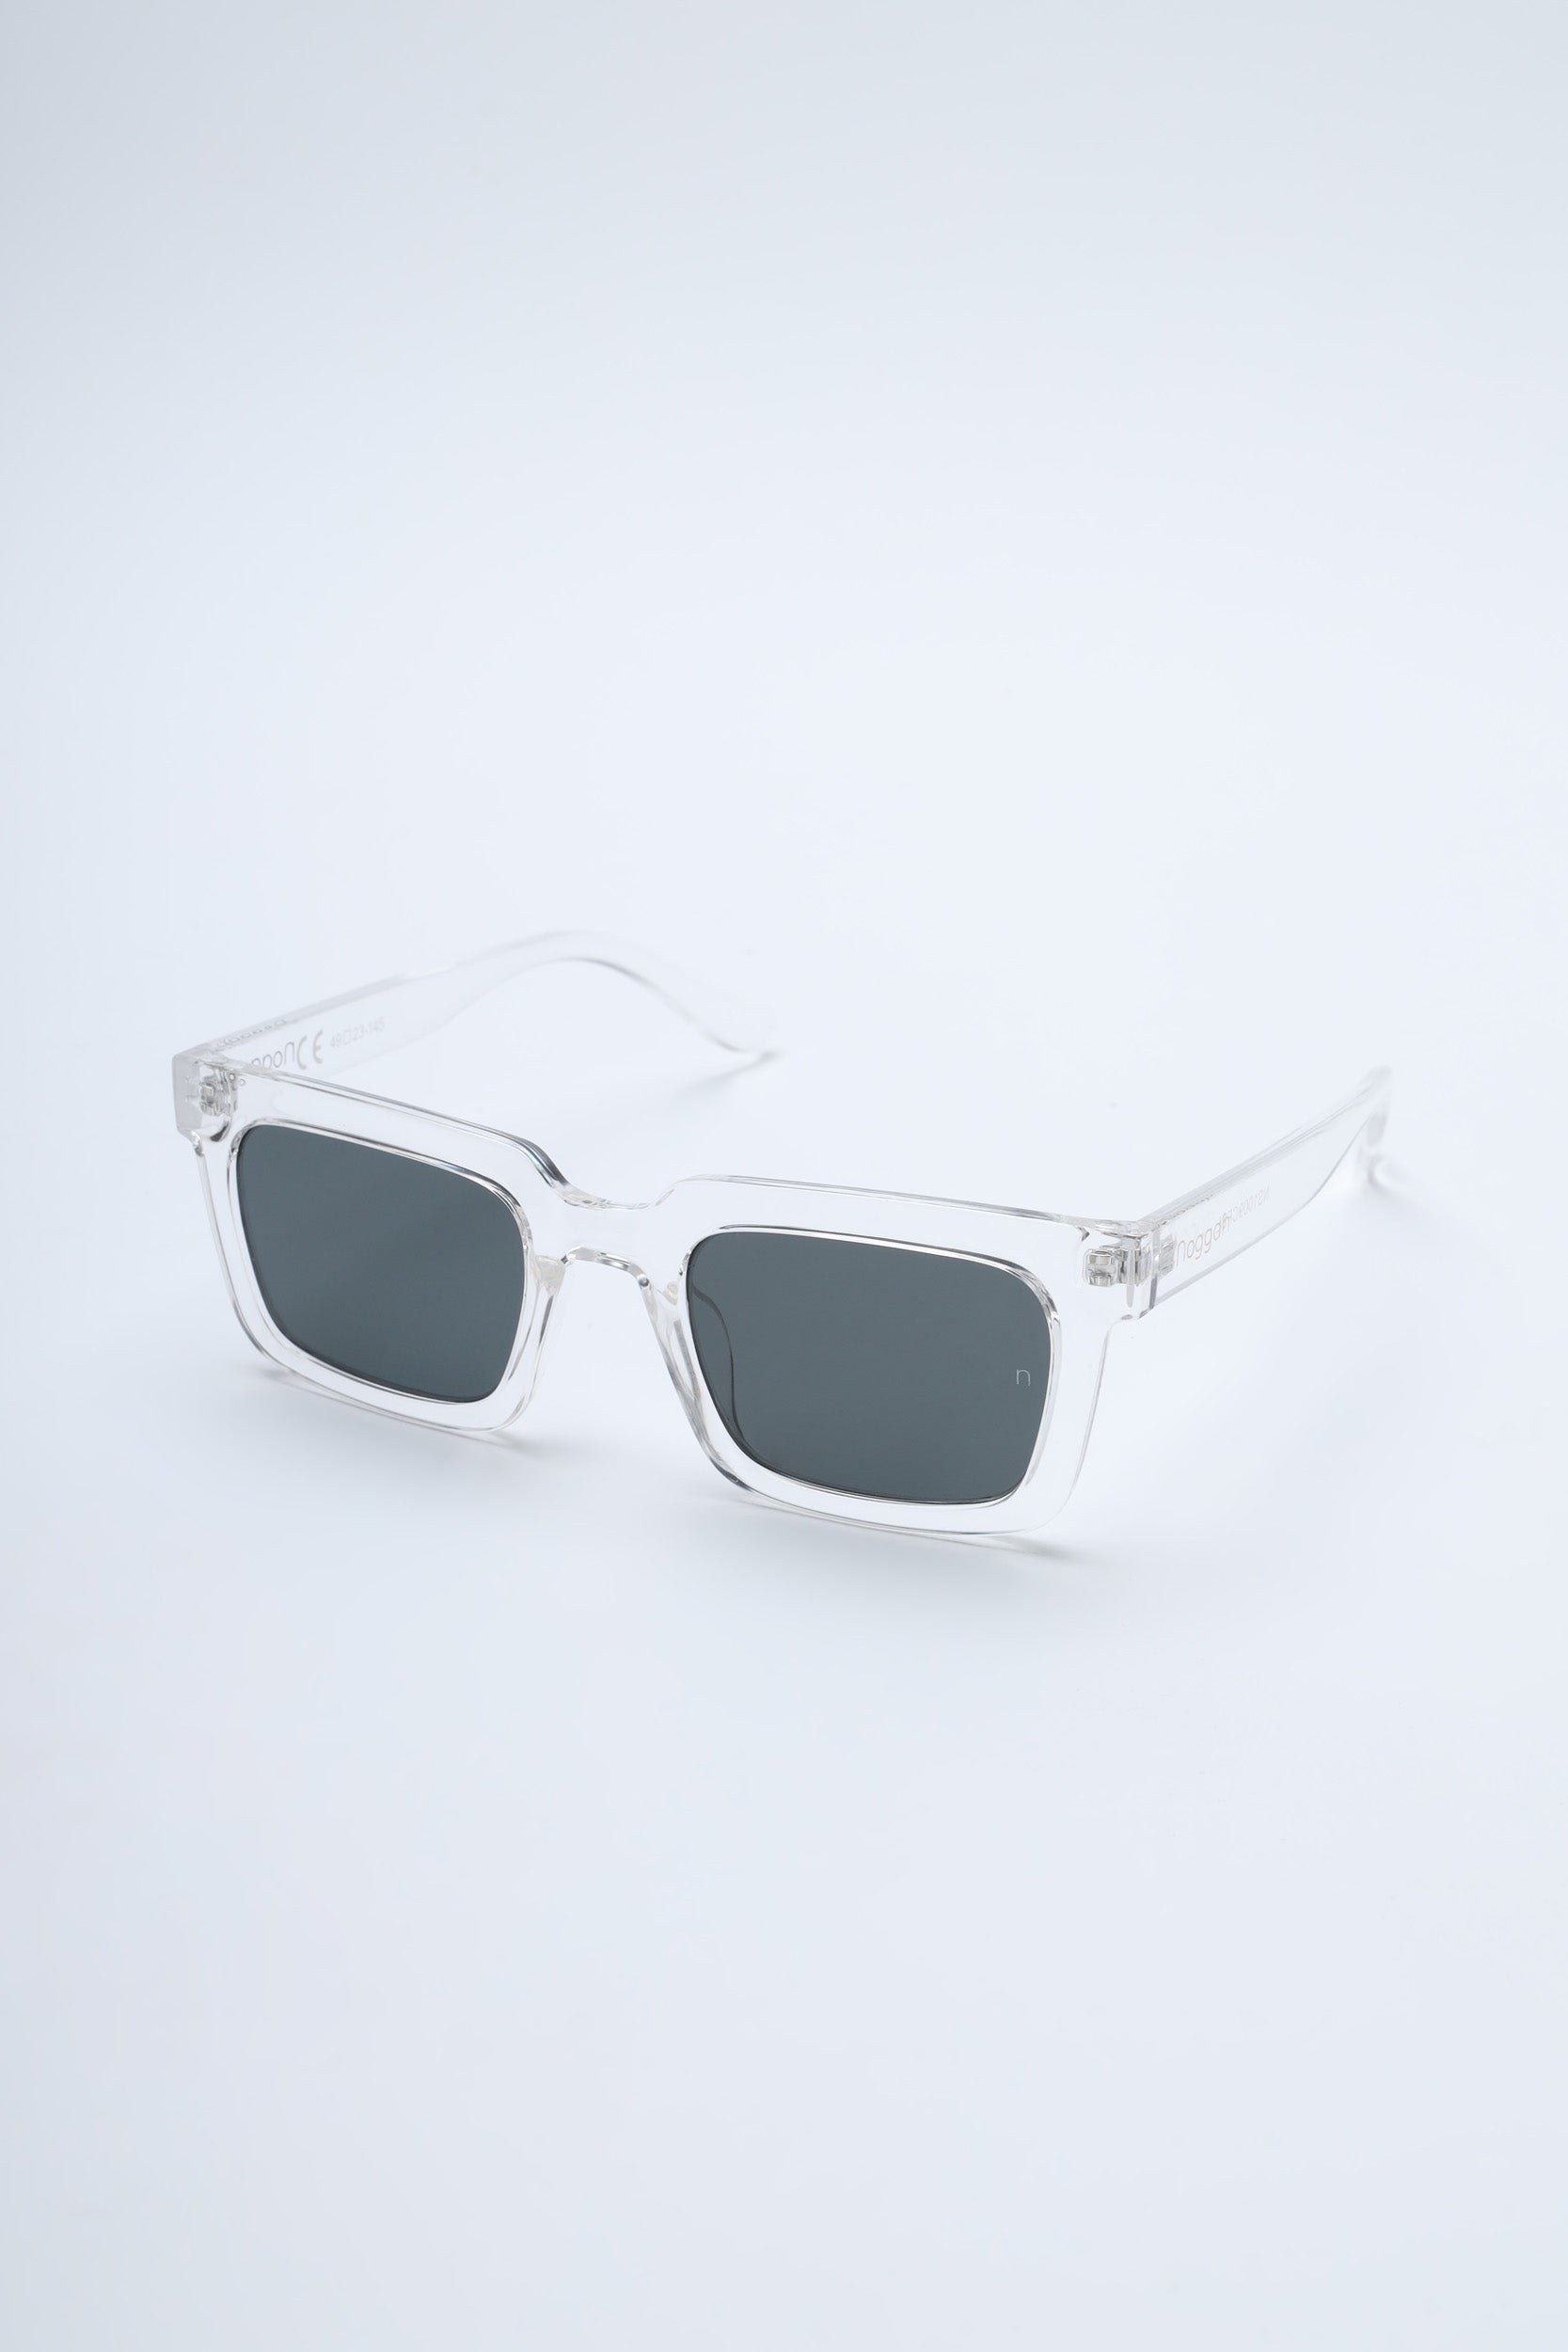 Buy Carrera Sole Unisex Non-Polarized Mask Polyamide Inj Gry Green Plastic  Sunglasses at Amazon.in